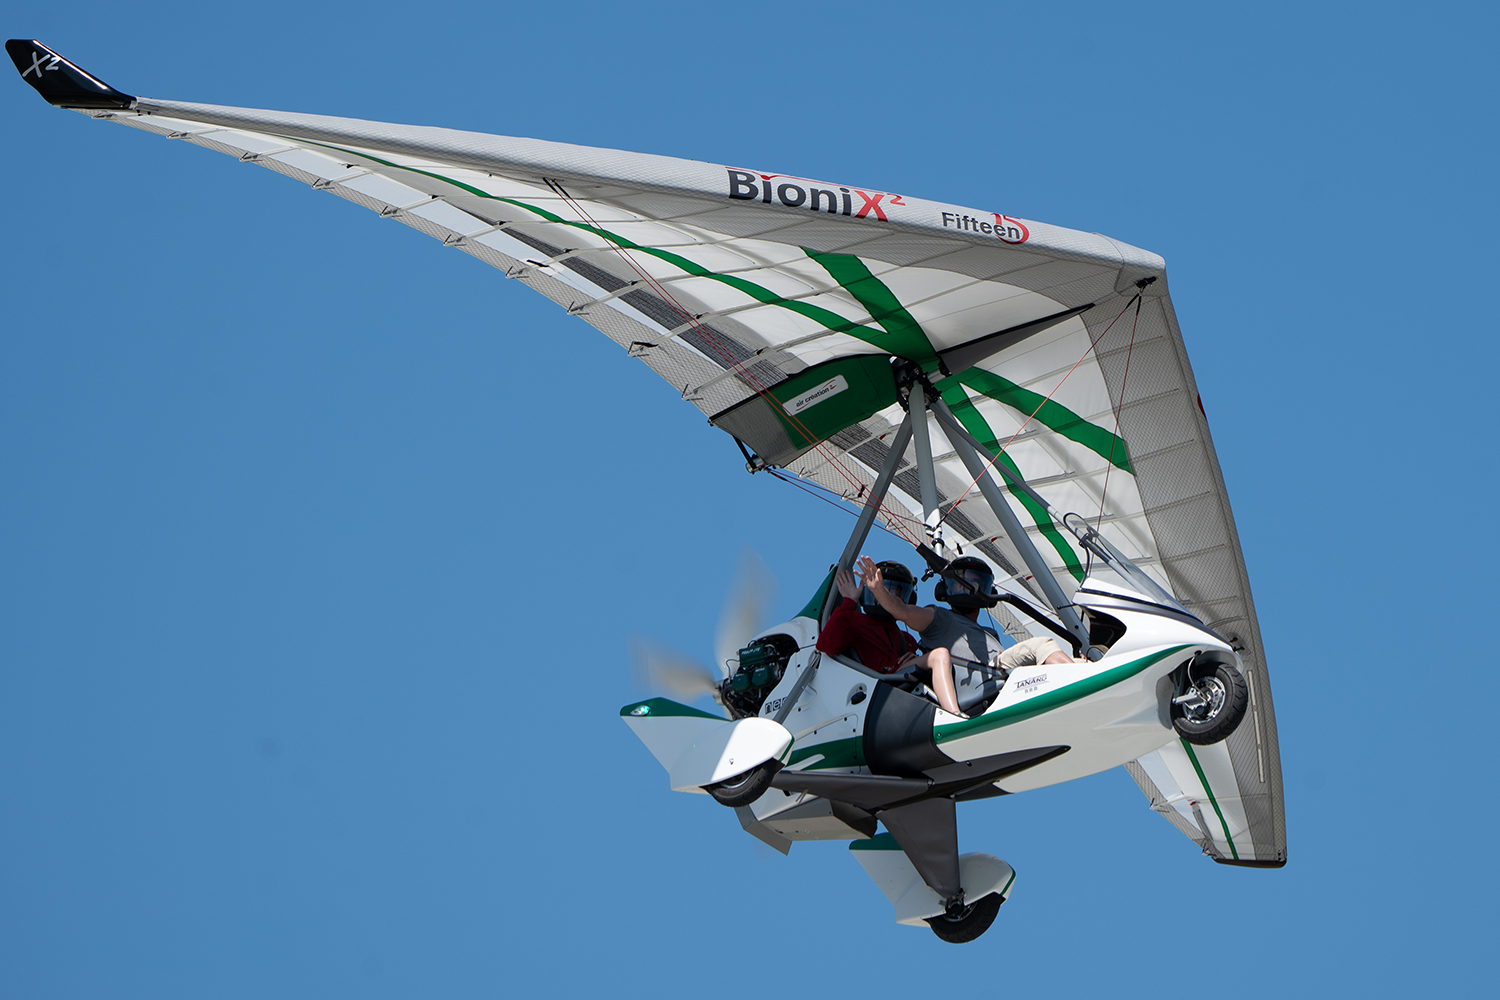 fly/en-vol-bionix2-15-tanarg-neo-product-ulm-pendulaire-microlihgt-ultralight-trike-wing-11.png